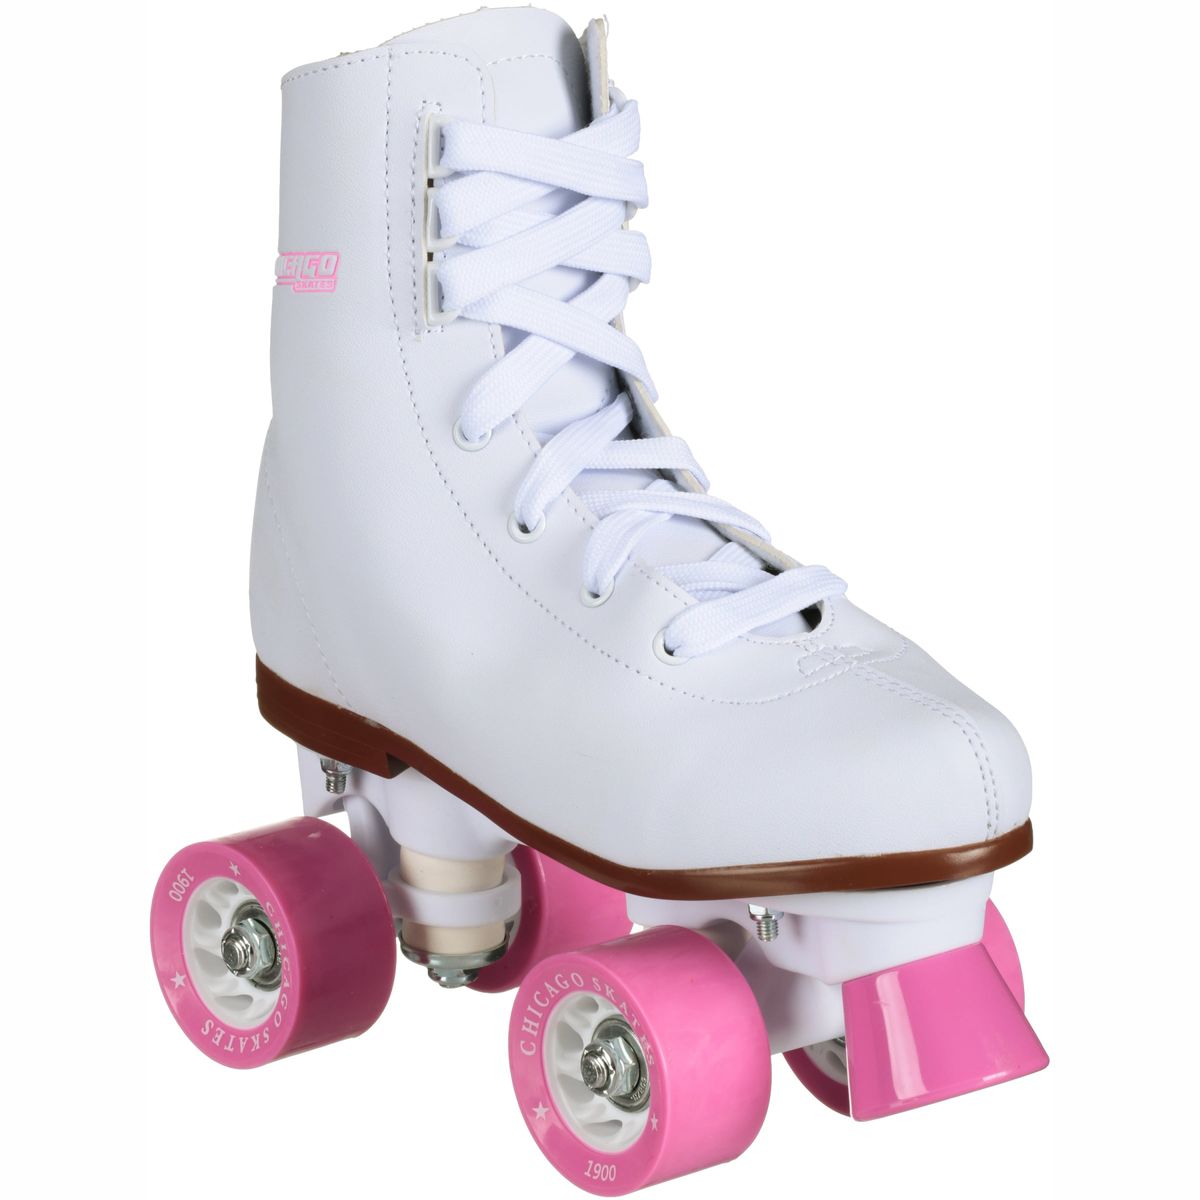 [RDY] [送料無料] Chicago 女の子用クラシッククアッドローラースケート ホワイト ジュニアリンクスケート 3号サイズ [楽天海外通販] | Chicago Girl's Classic Quad Roller Skates White Junior Rink Skates, Size 3